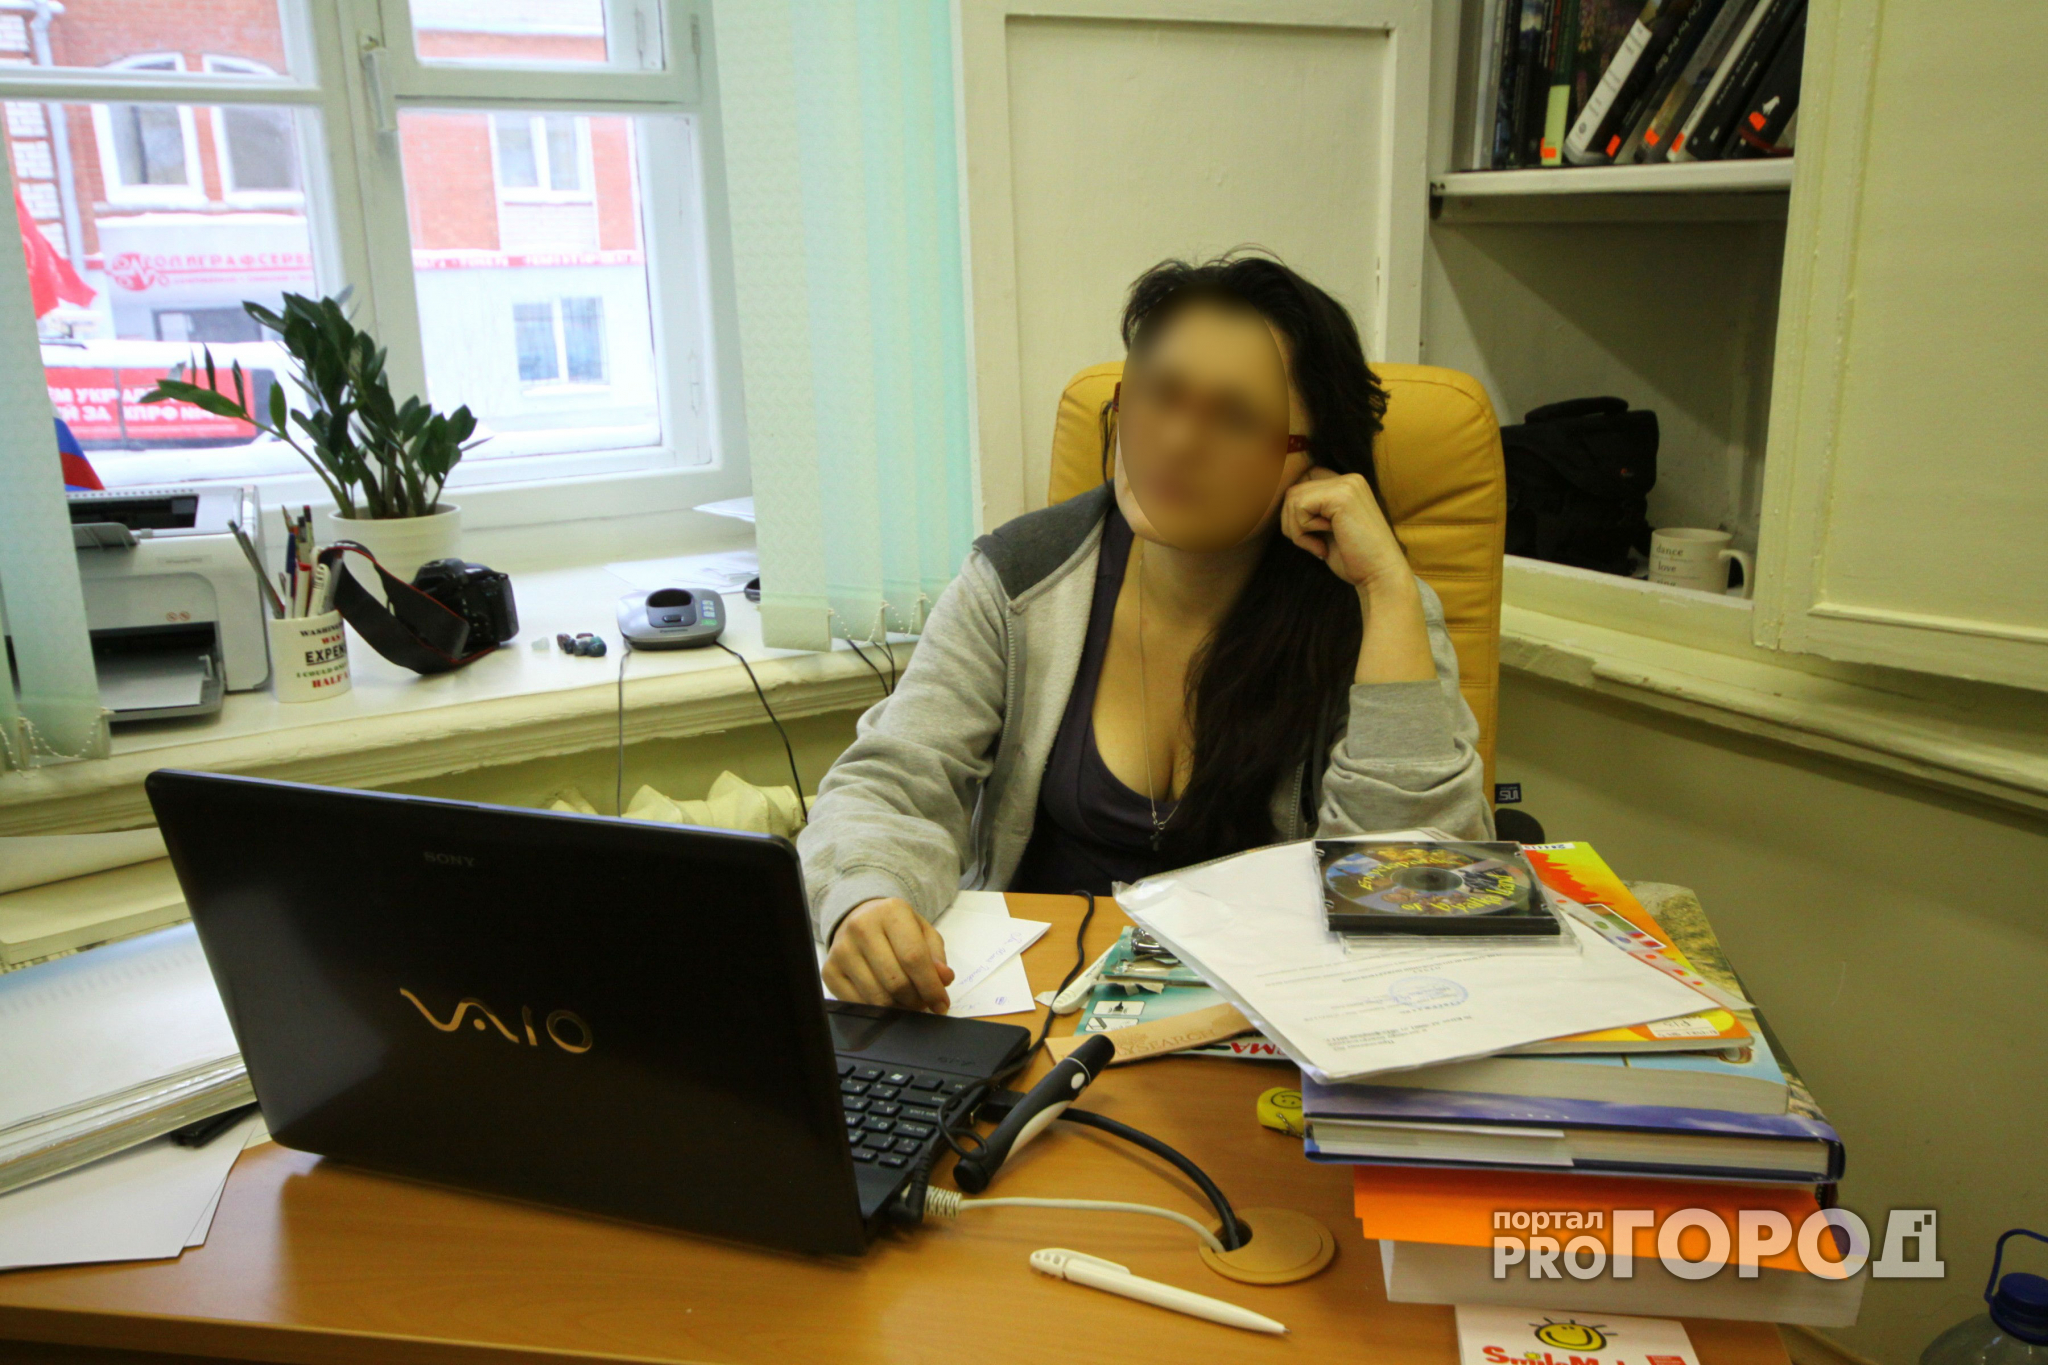 Молодая женщина из Чебоксар дорого поплатилась за виртуальное знакомство